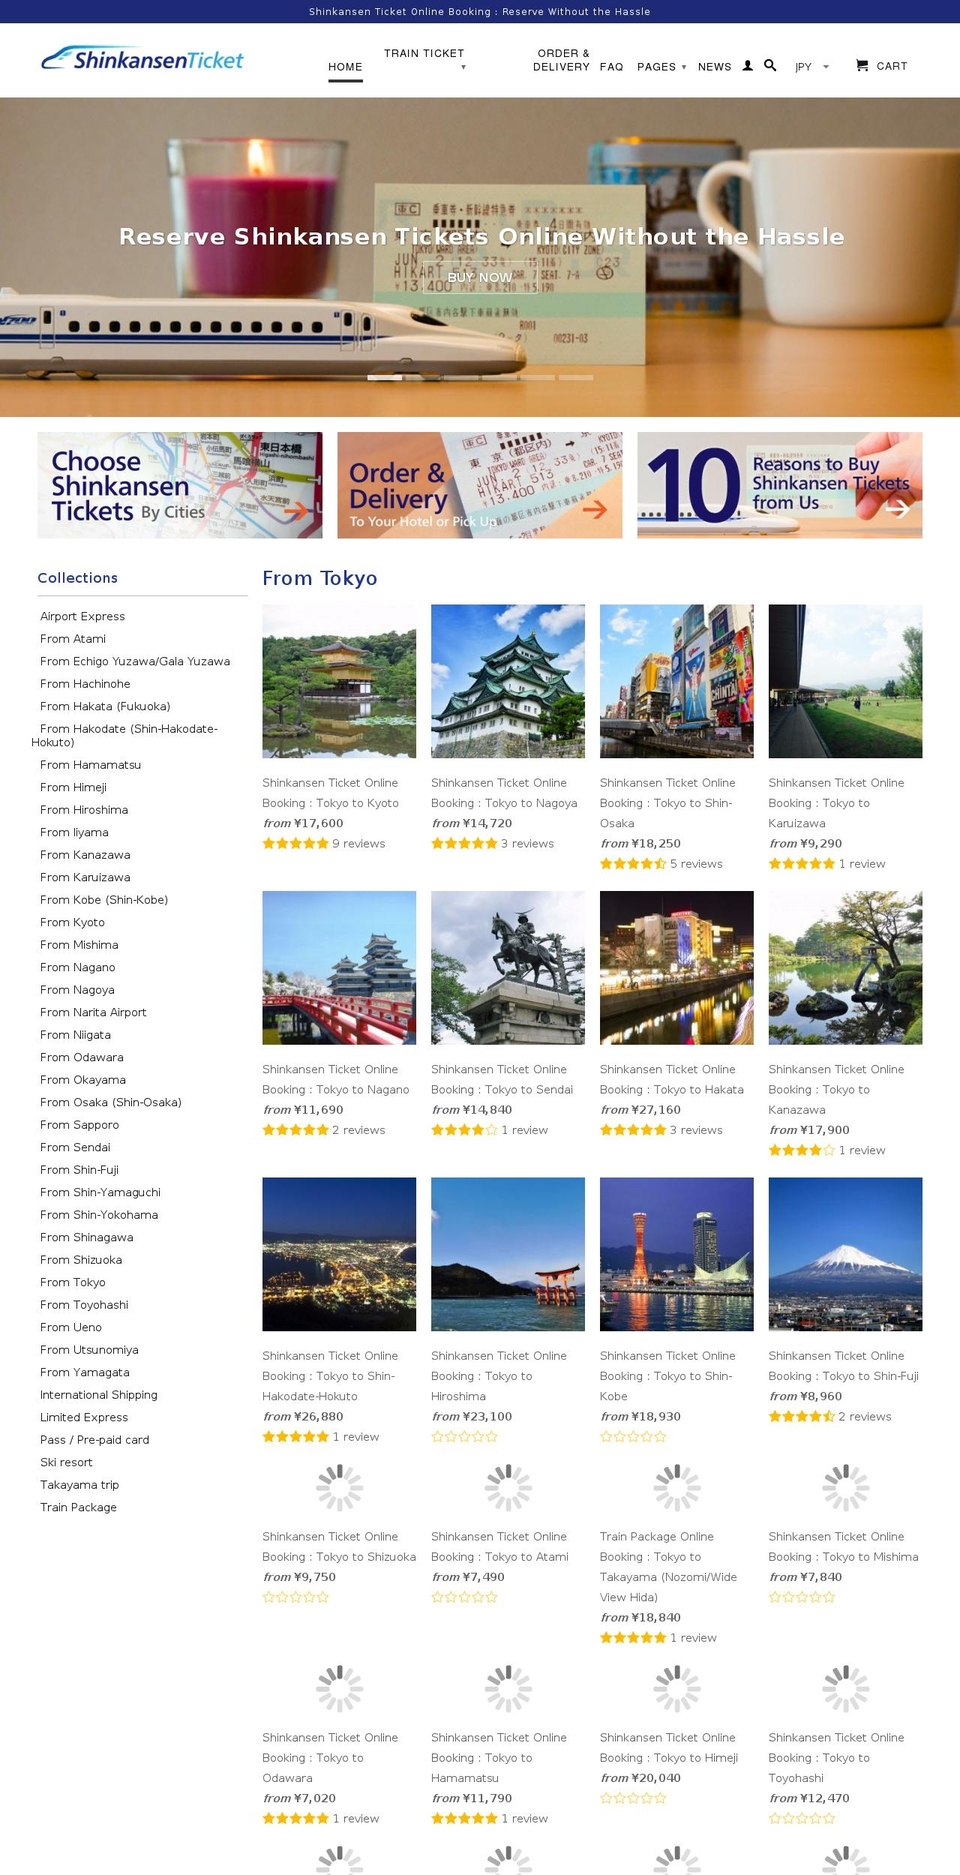 shinkansen-ticket.com shopify website screenshot